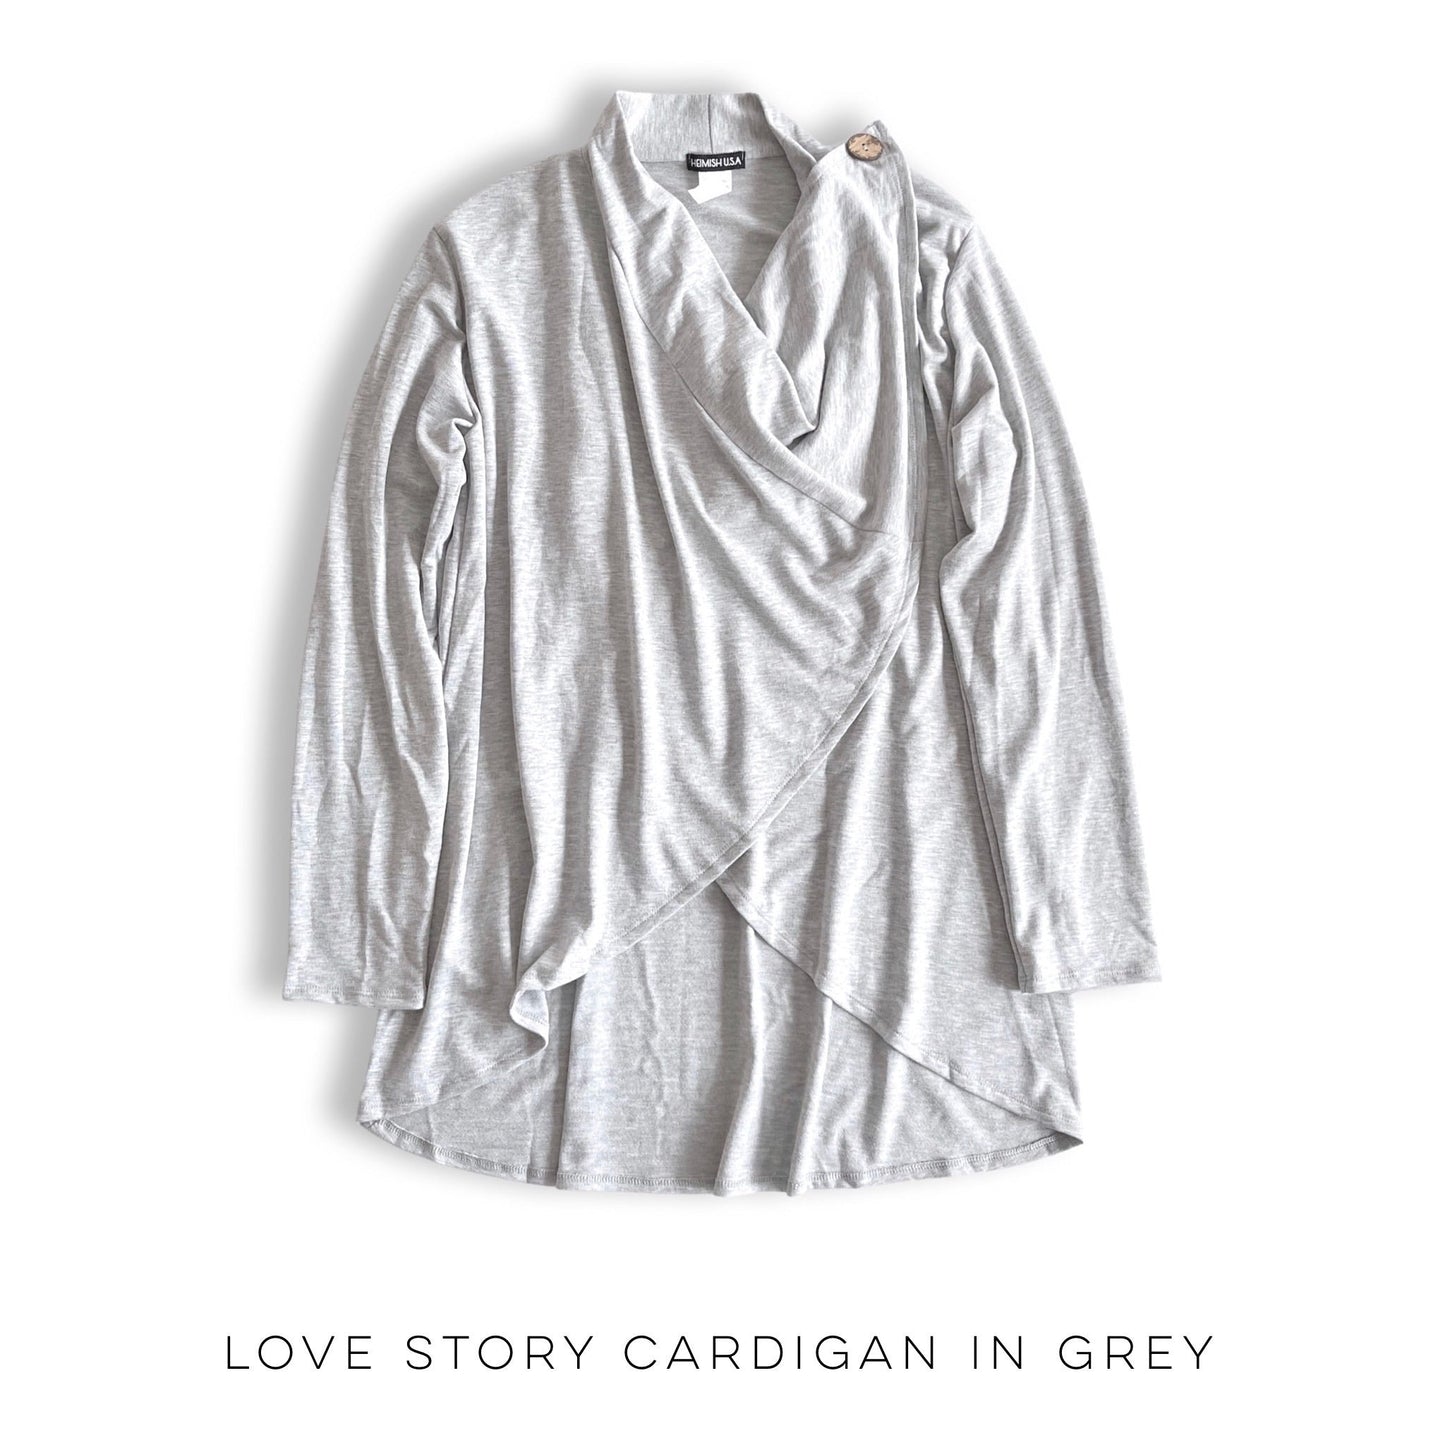 Love Story Cardigan in Grey